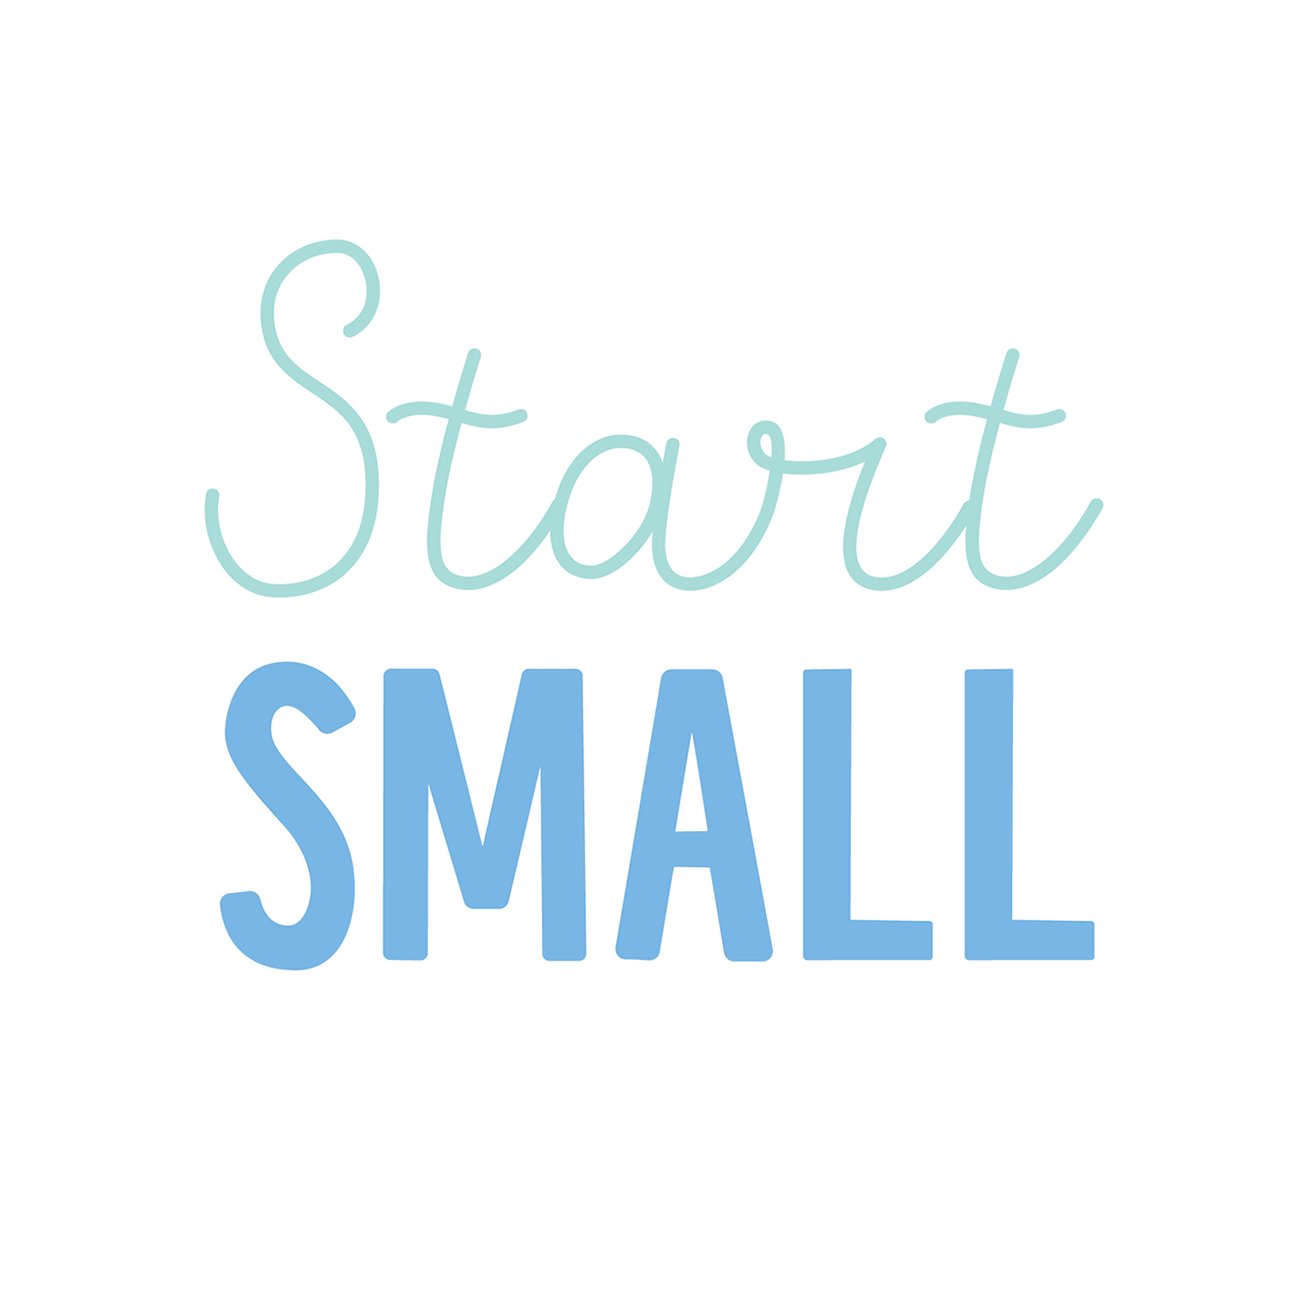 Start Small, Part 1: Small Beginnings